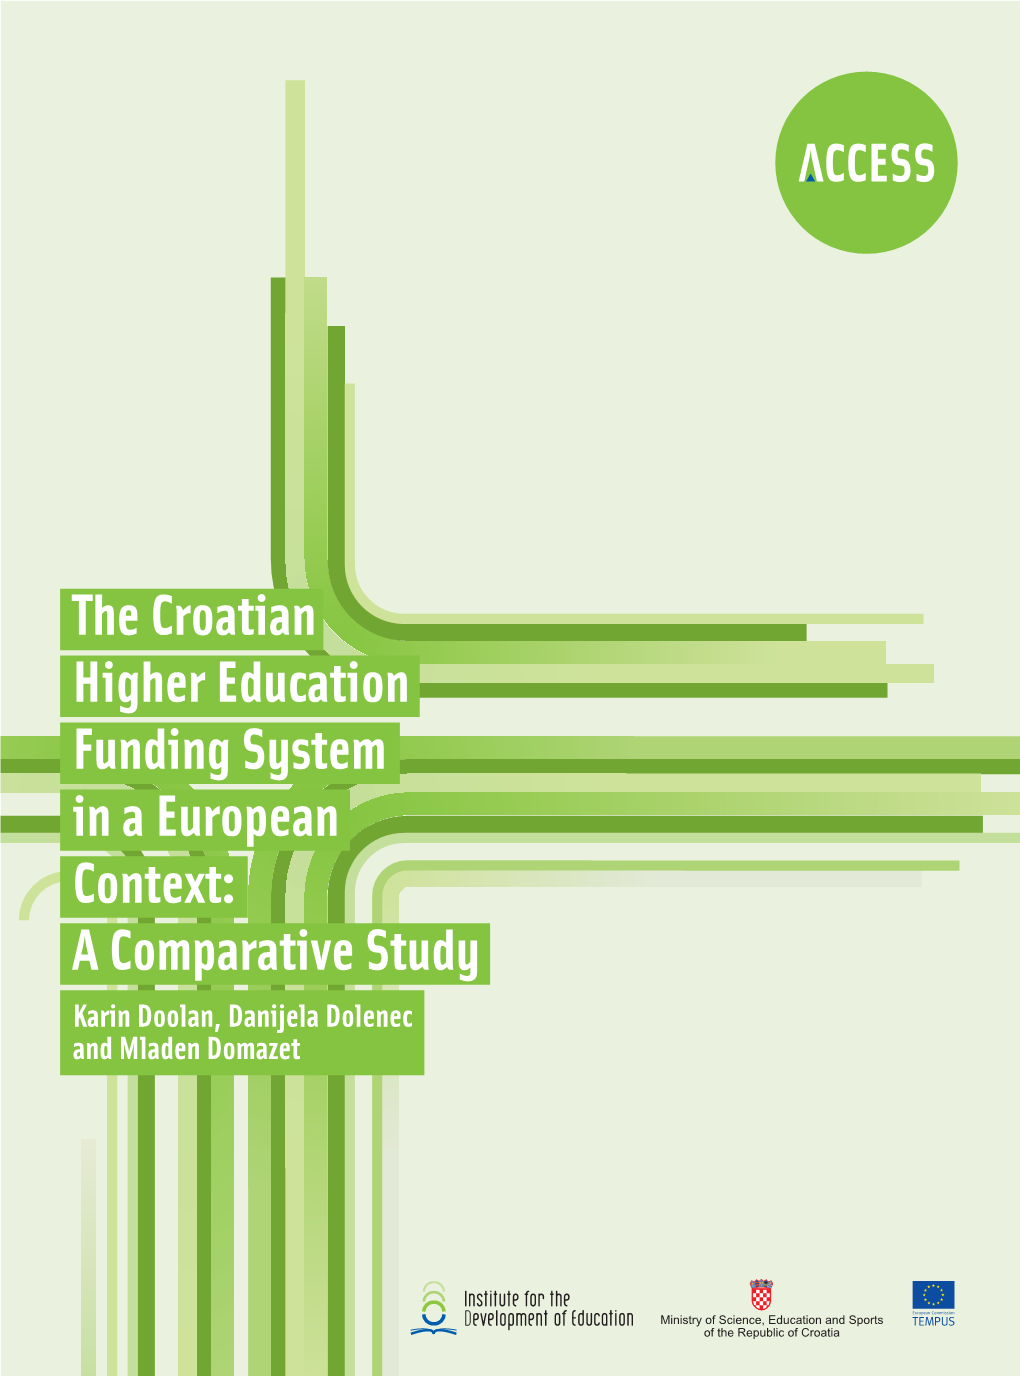 The Croatian Higher Education Funding System in a European Context: a Comparative Study Karin Doolan, Danijela Dolenec & Mladen Domazet